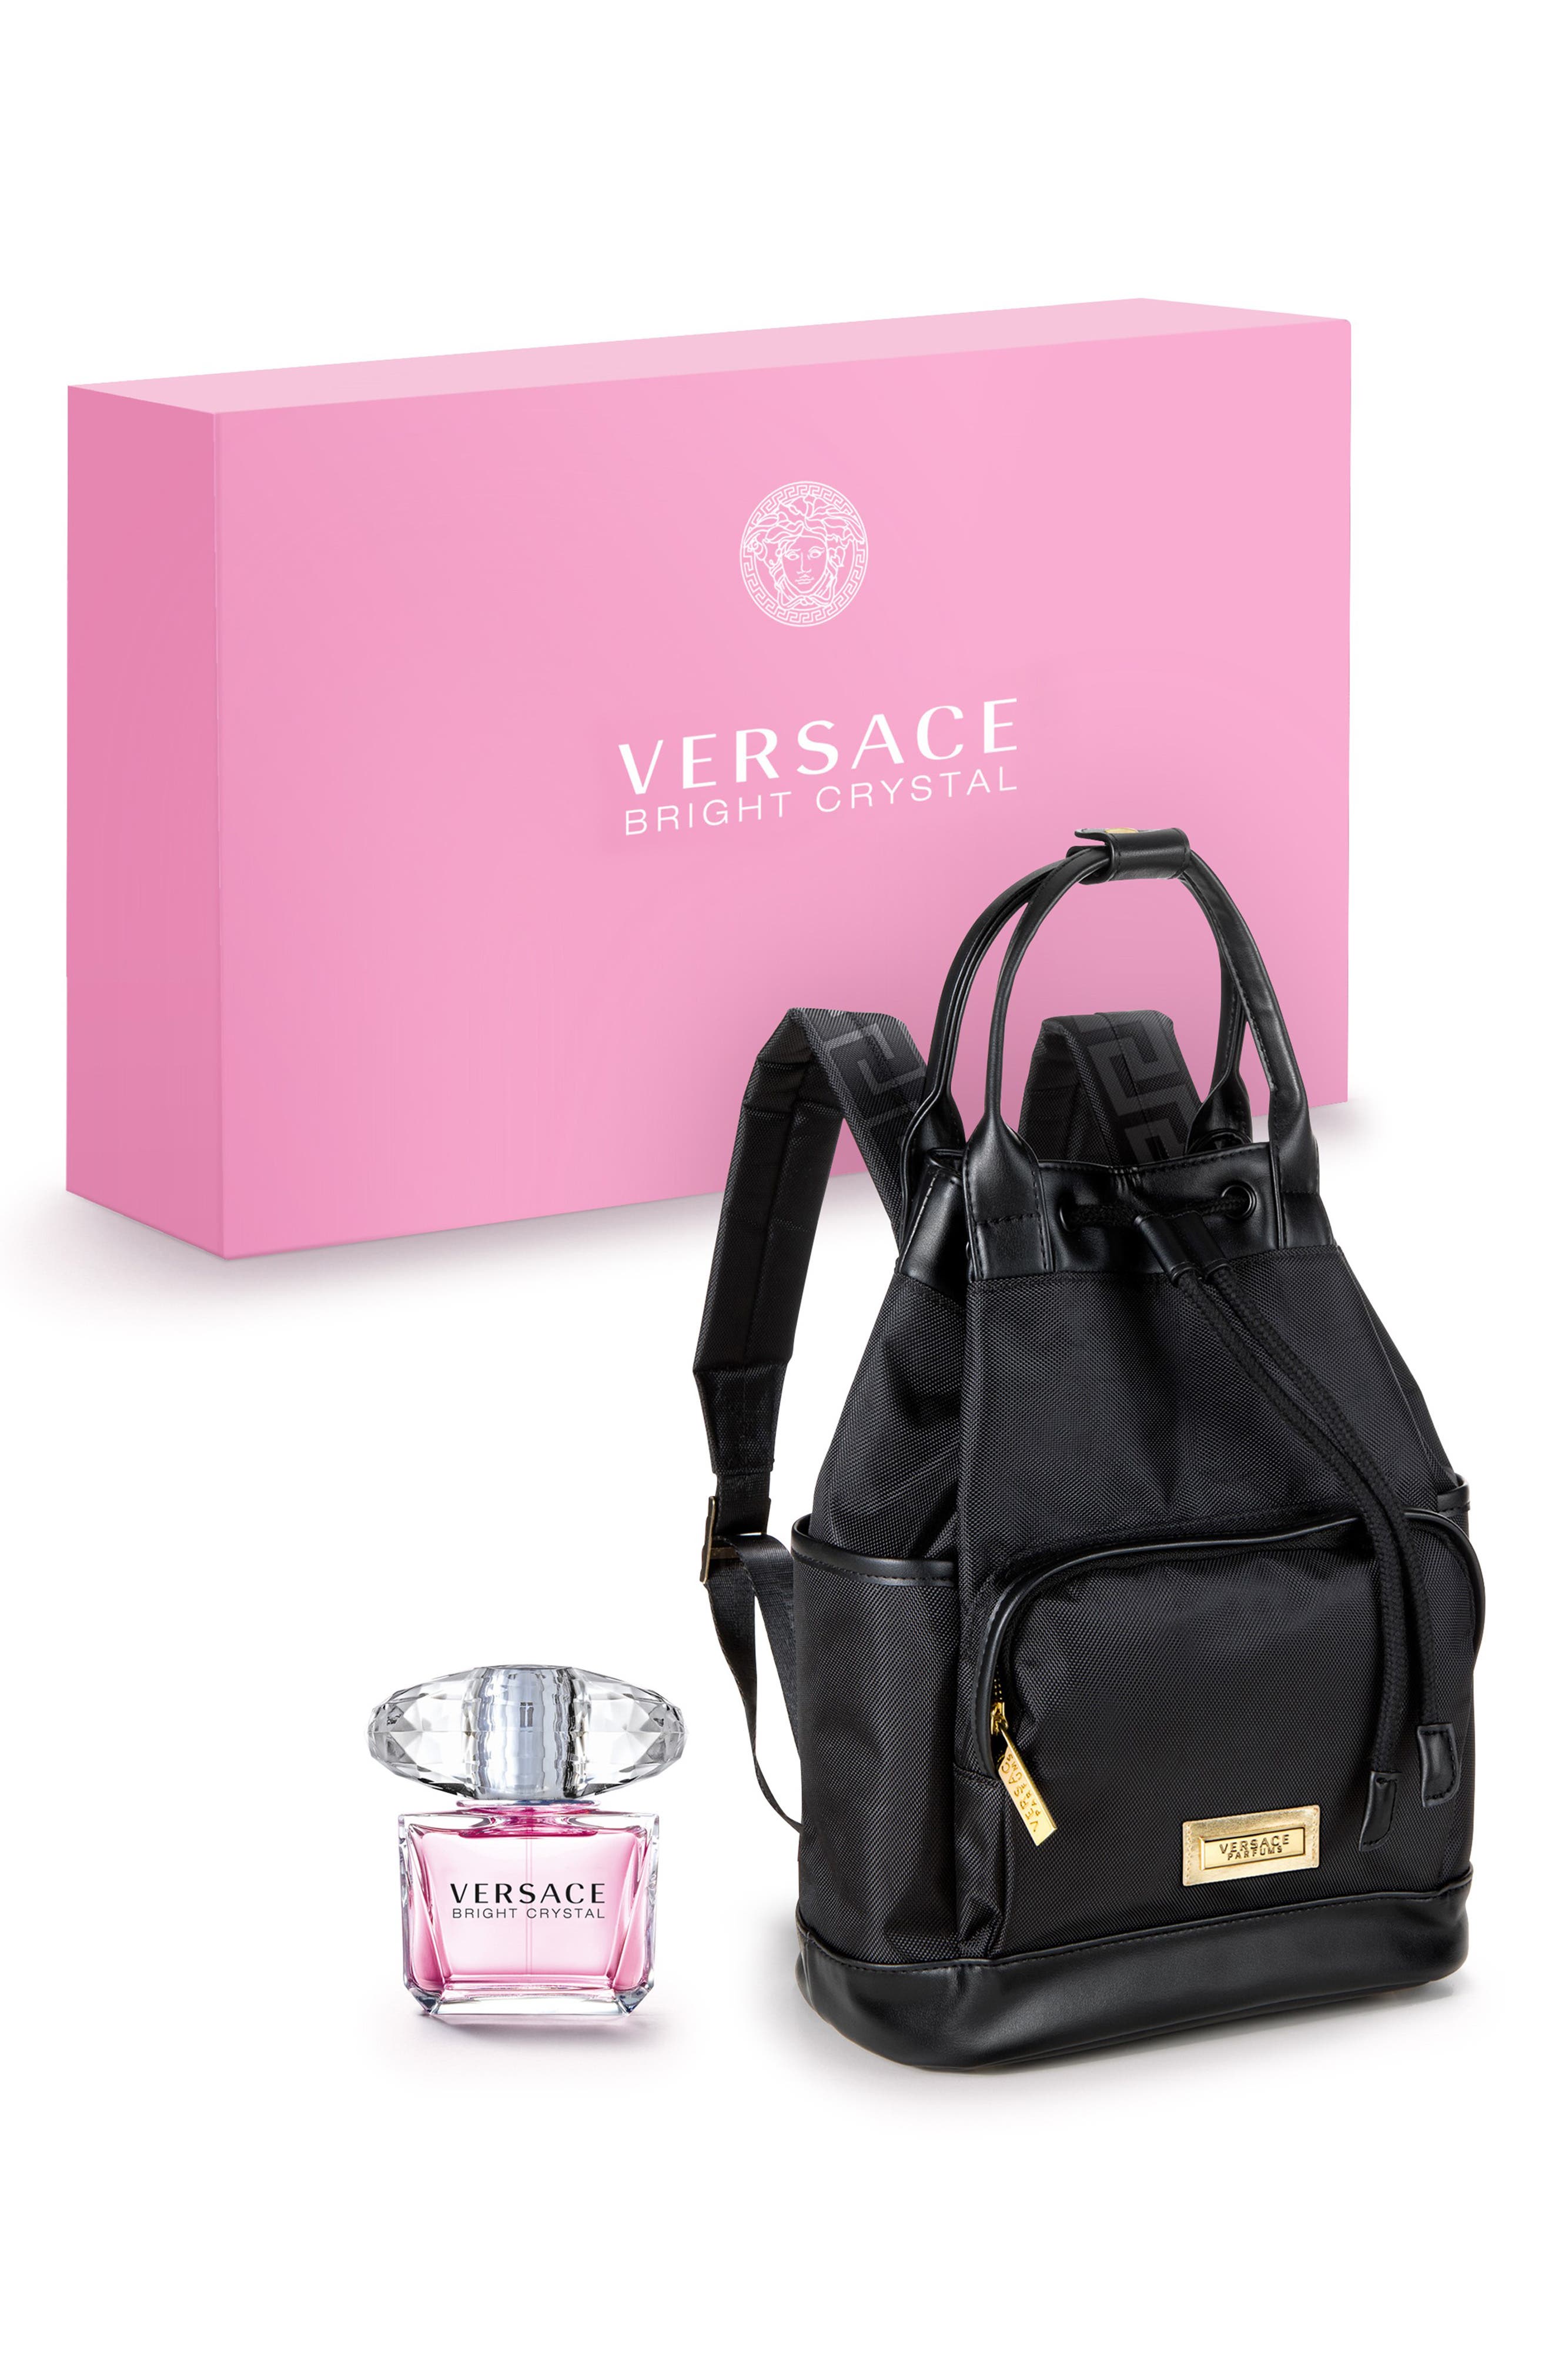 Versace Bright Crystal Fragrance 